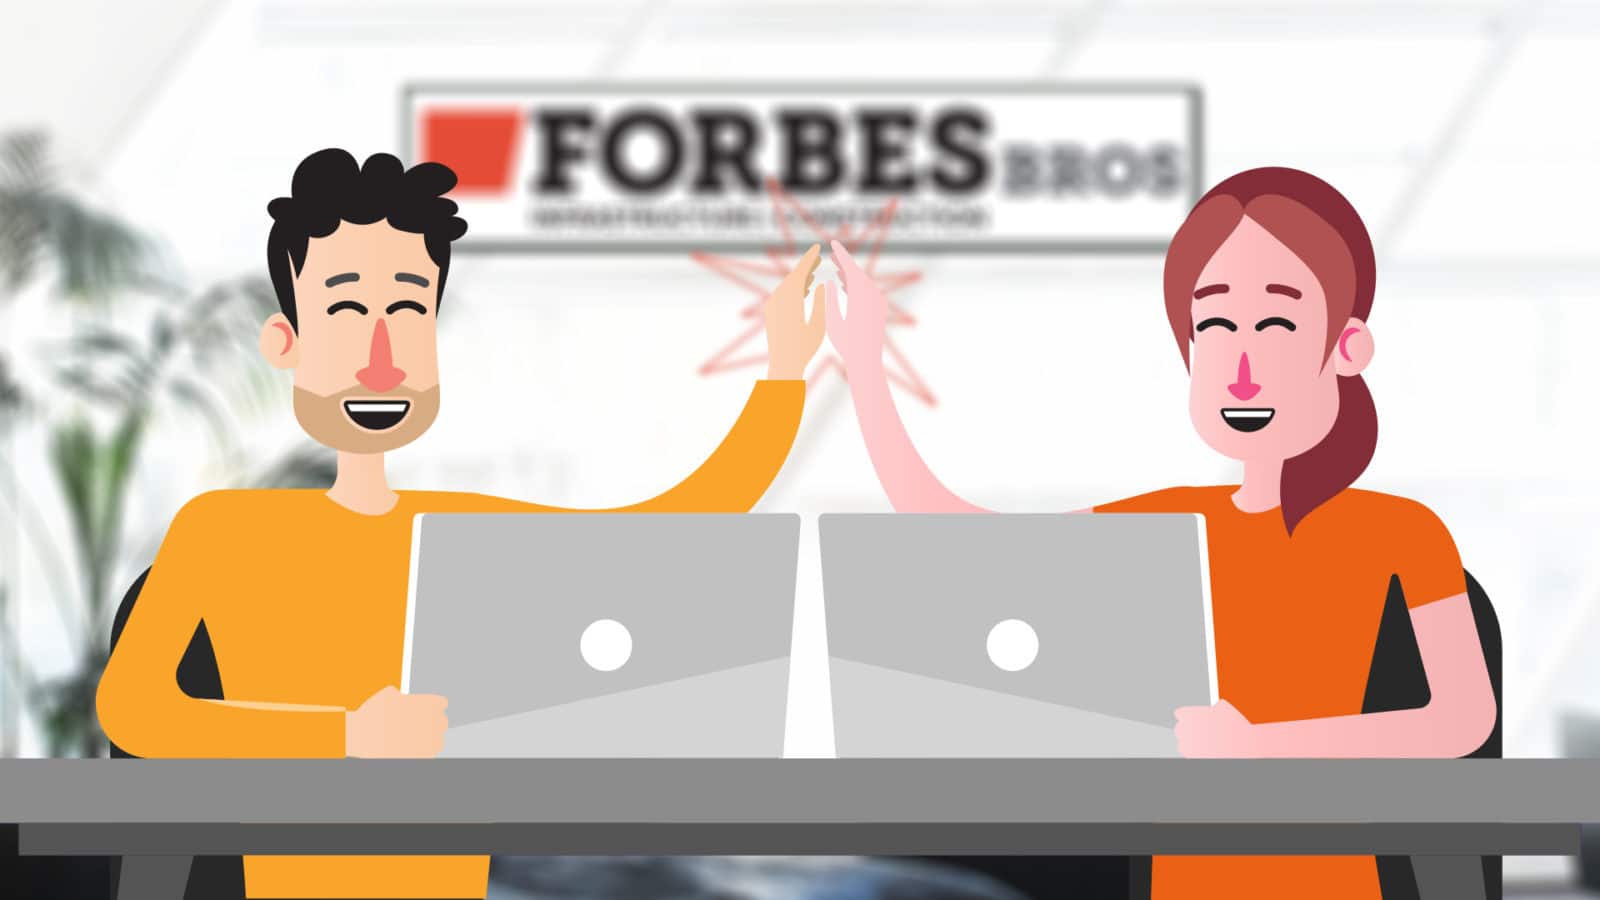 Forbes Module A - Joe & Jane Celebrate